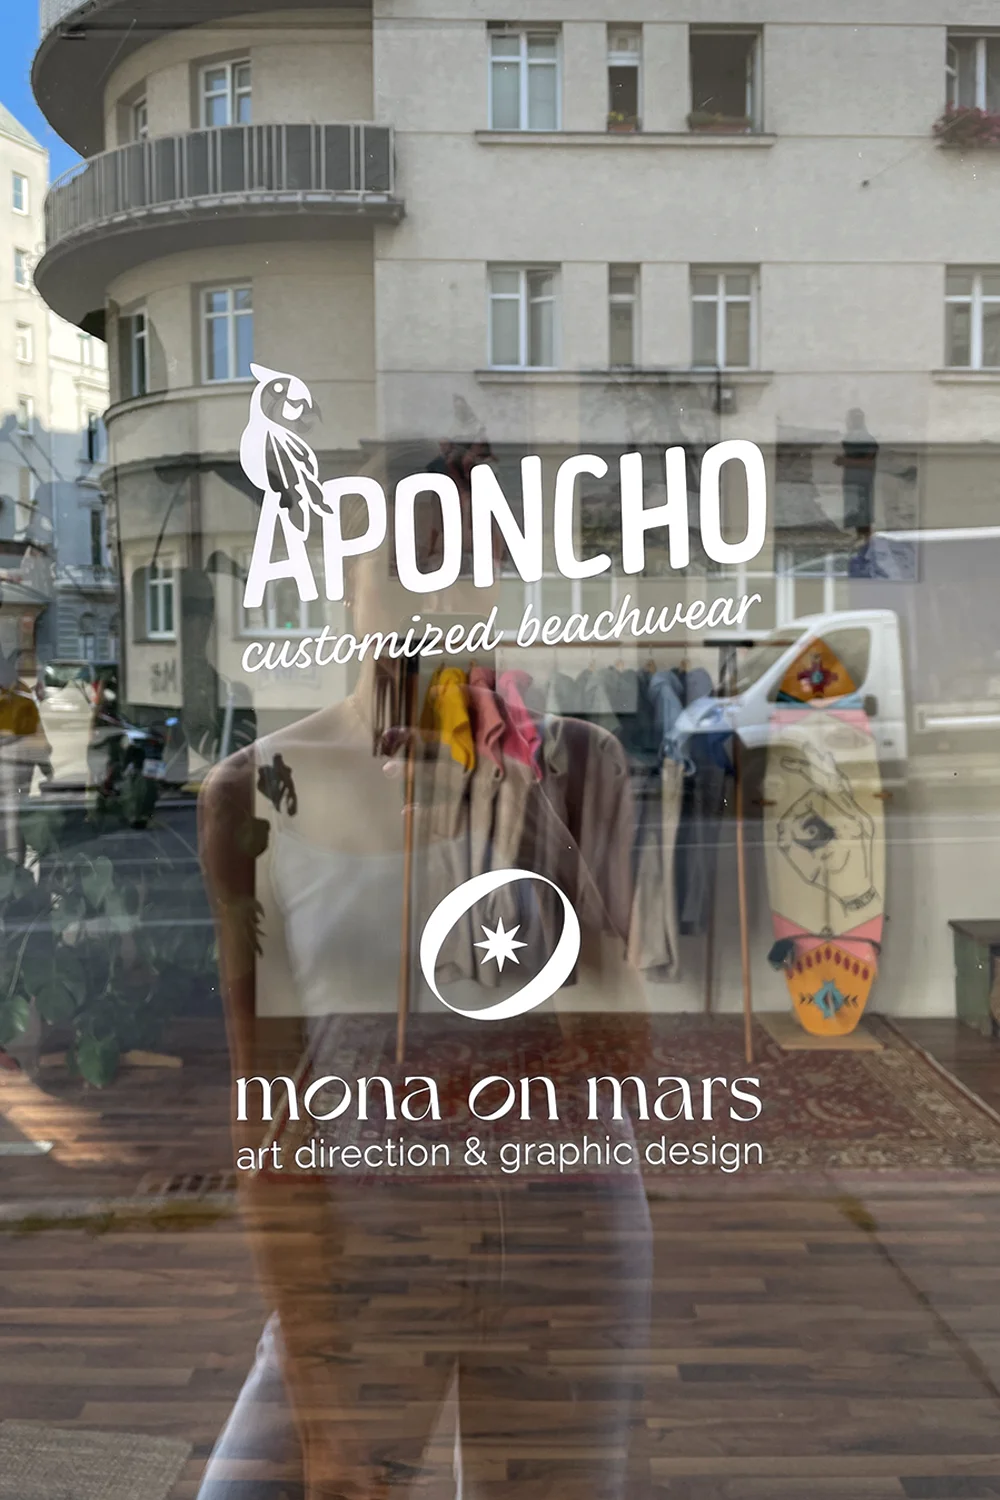 monaonmars-aponcho-logo-window